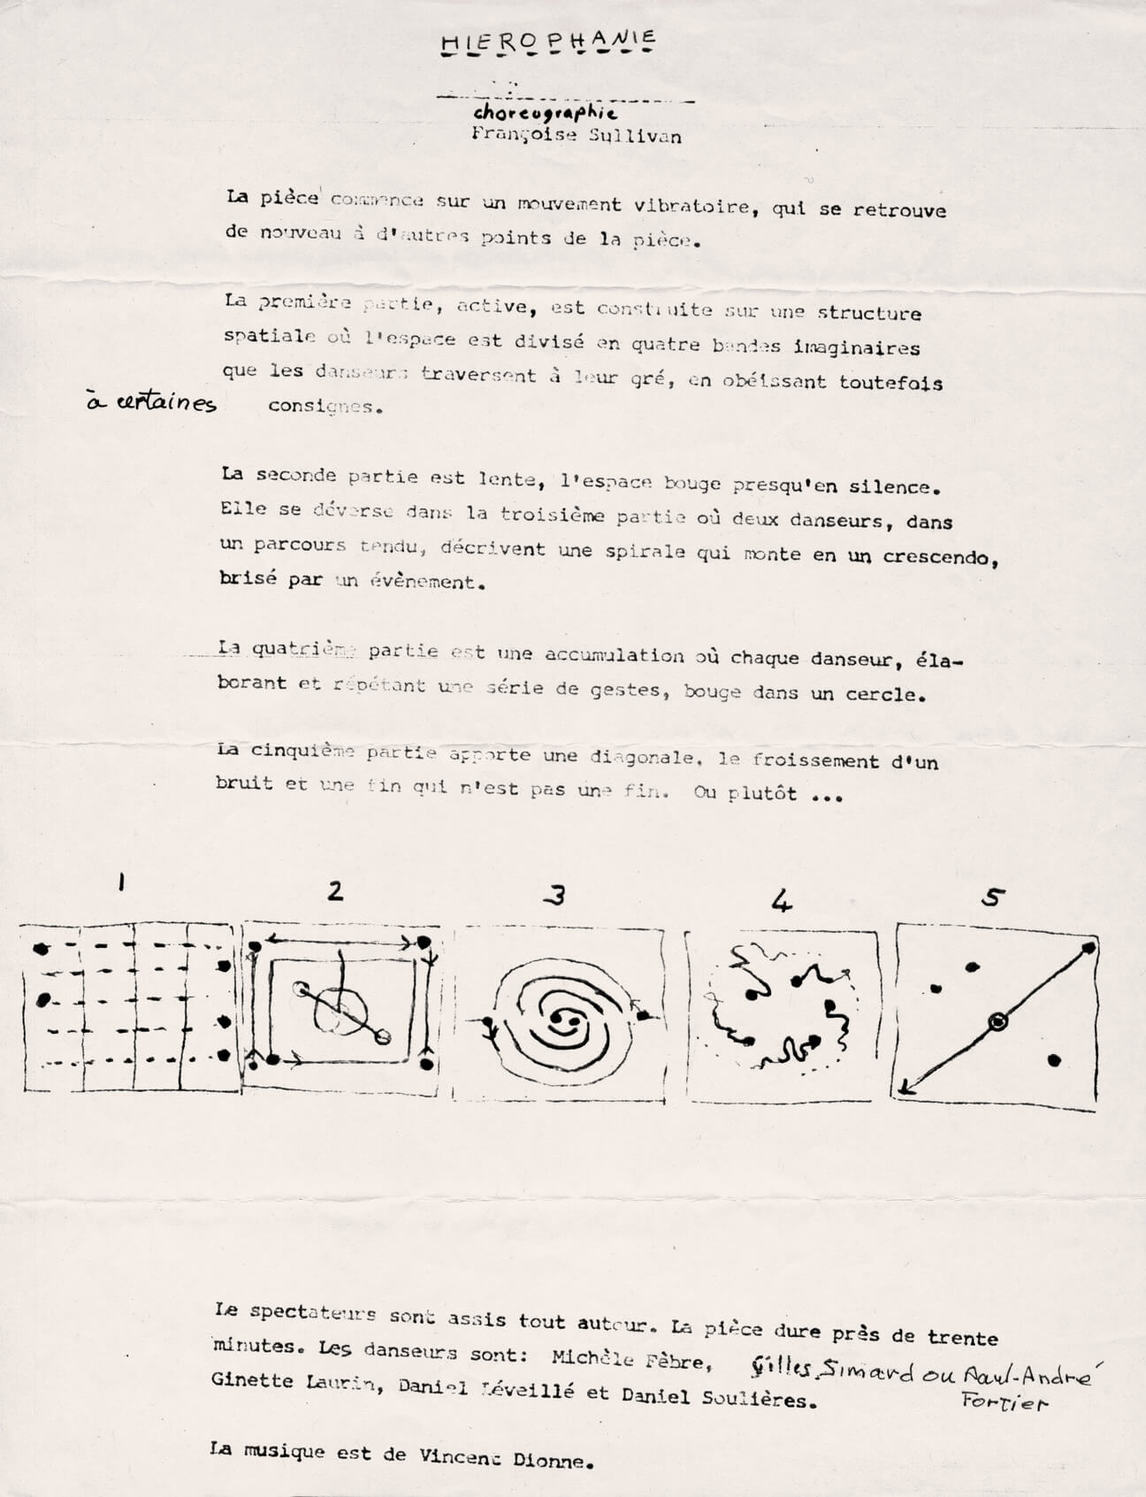 Choreographic notes for Françoise Sullivan’s Hierophany (Hiérophanie), 1979.